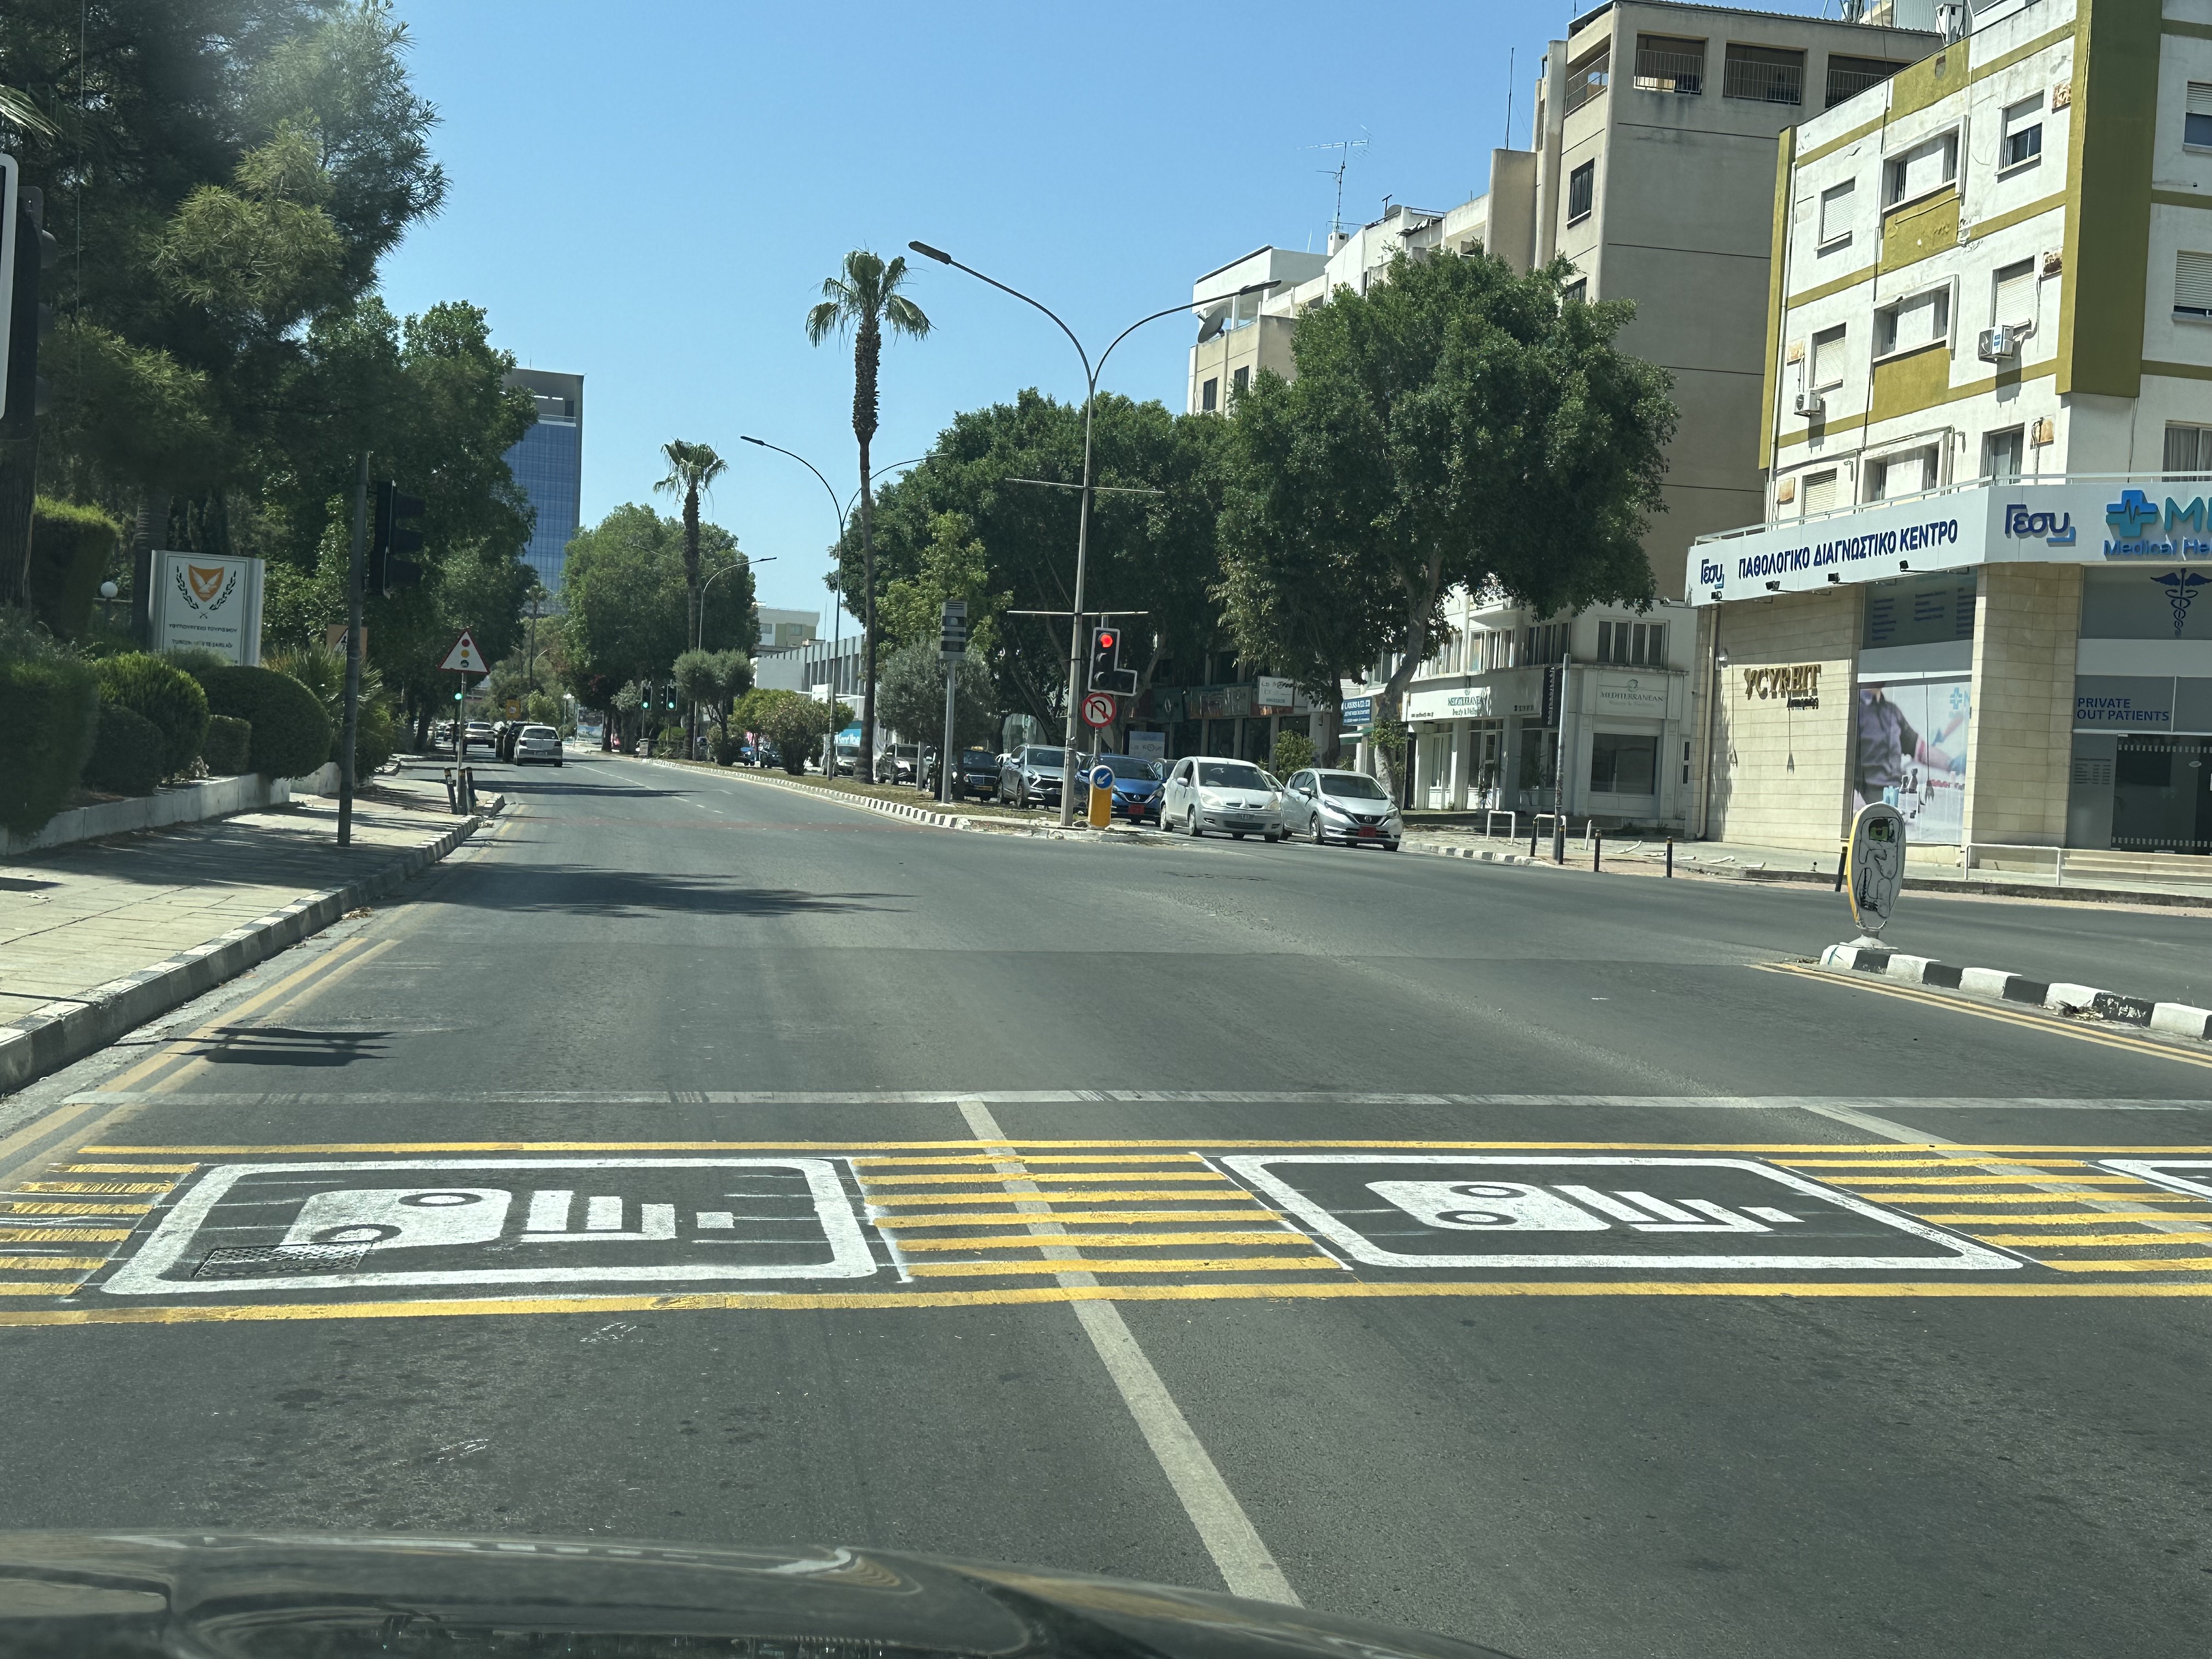 Road markings warn of traffic cameras